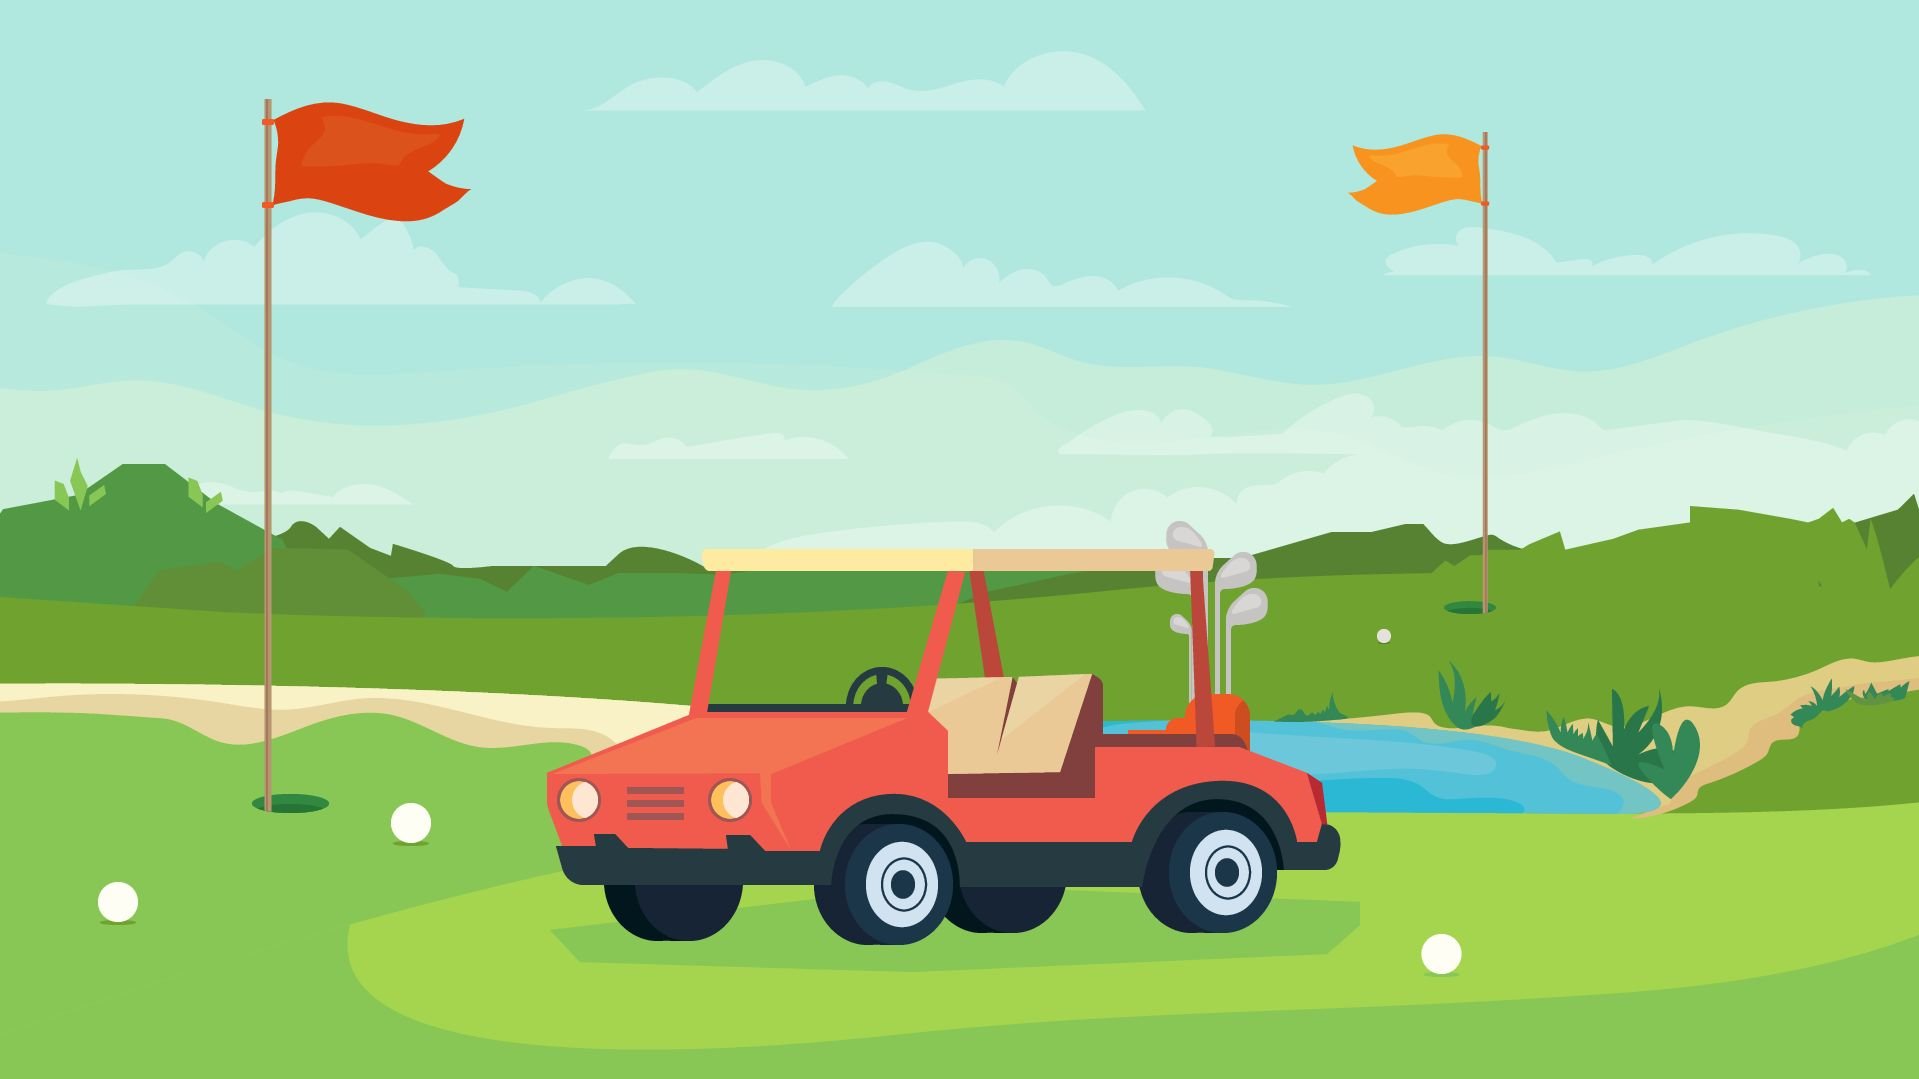 Golf game - Illustration cover image.